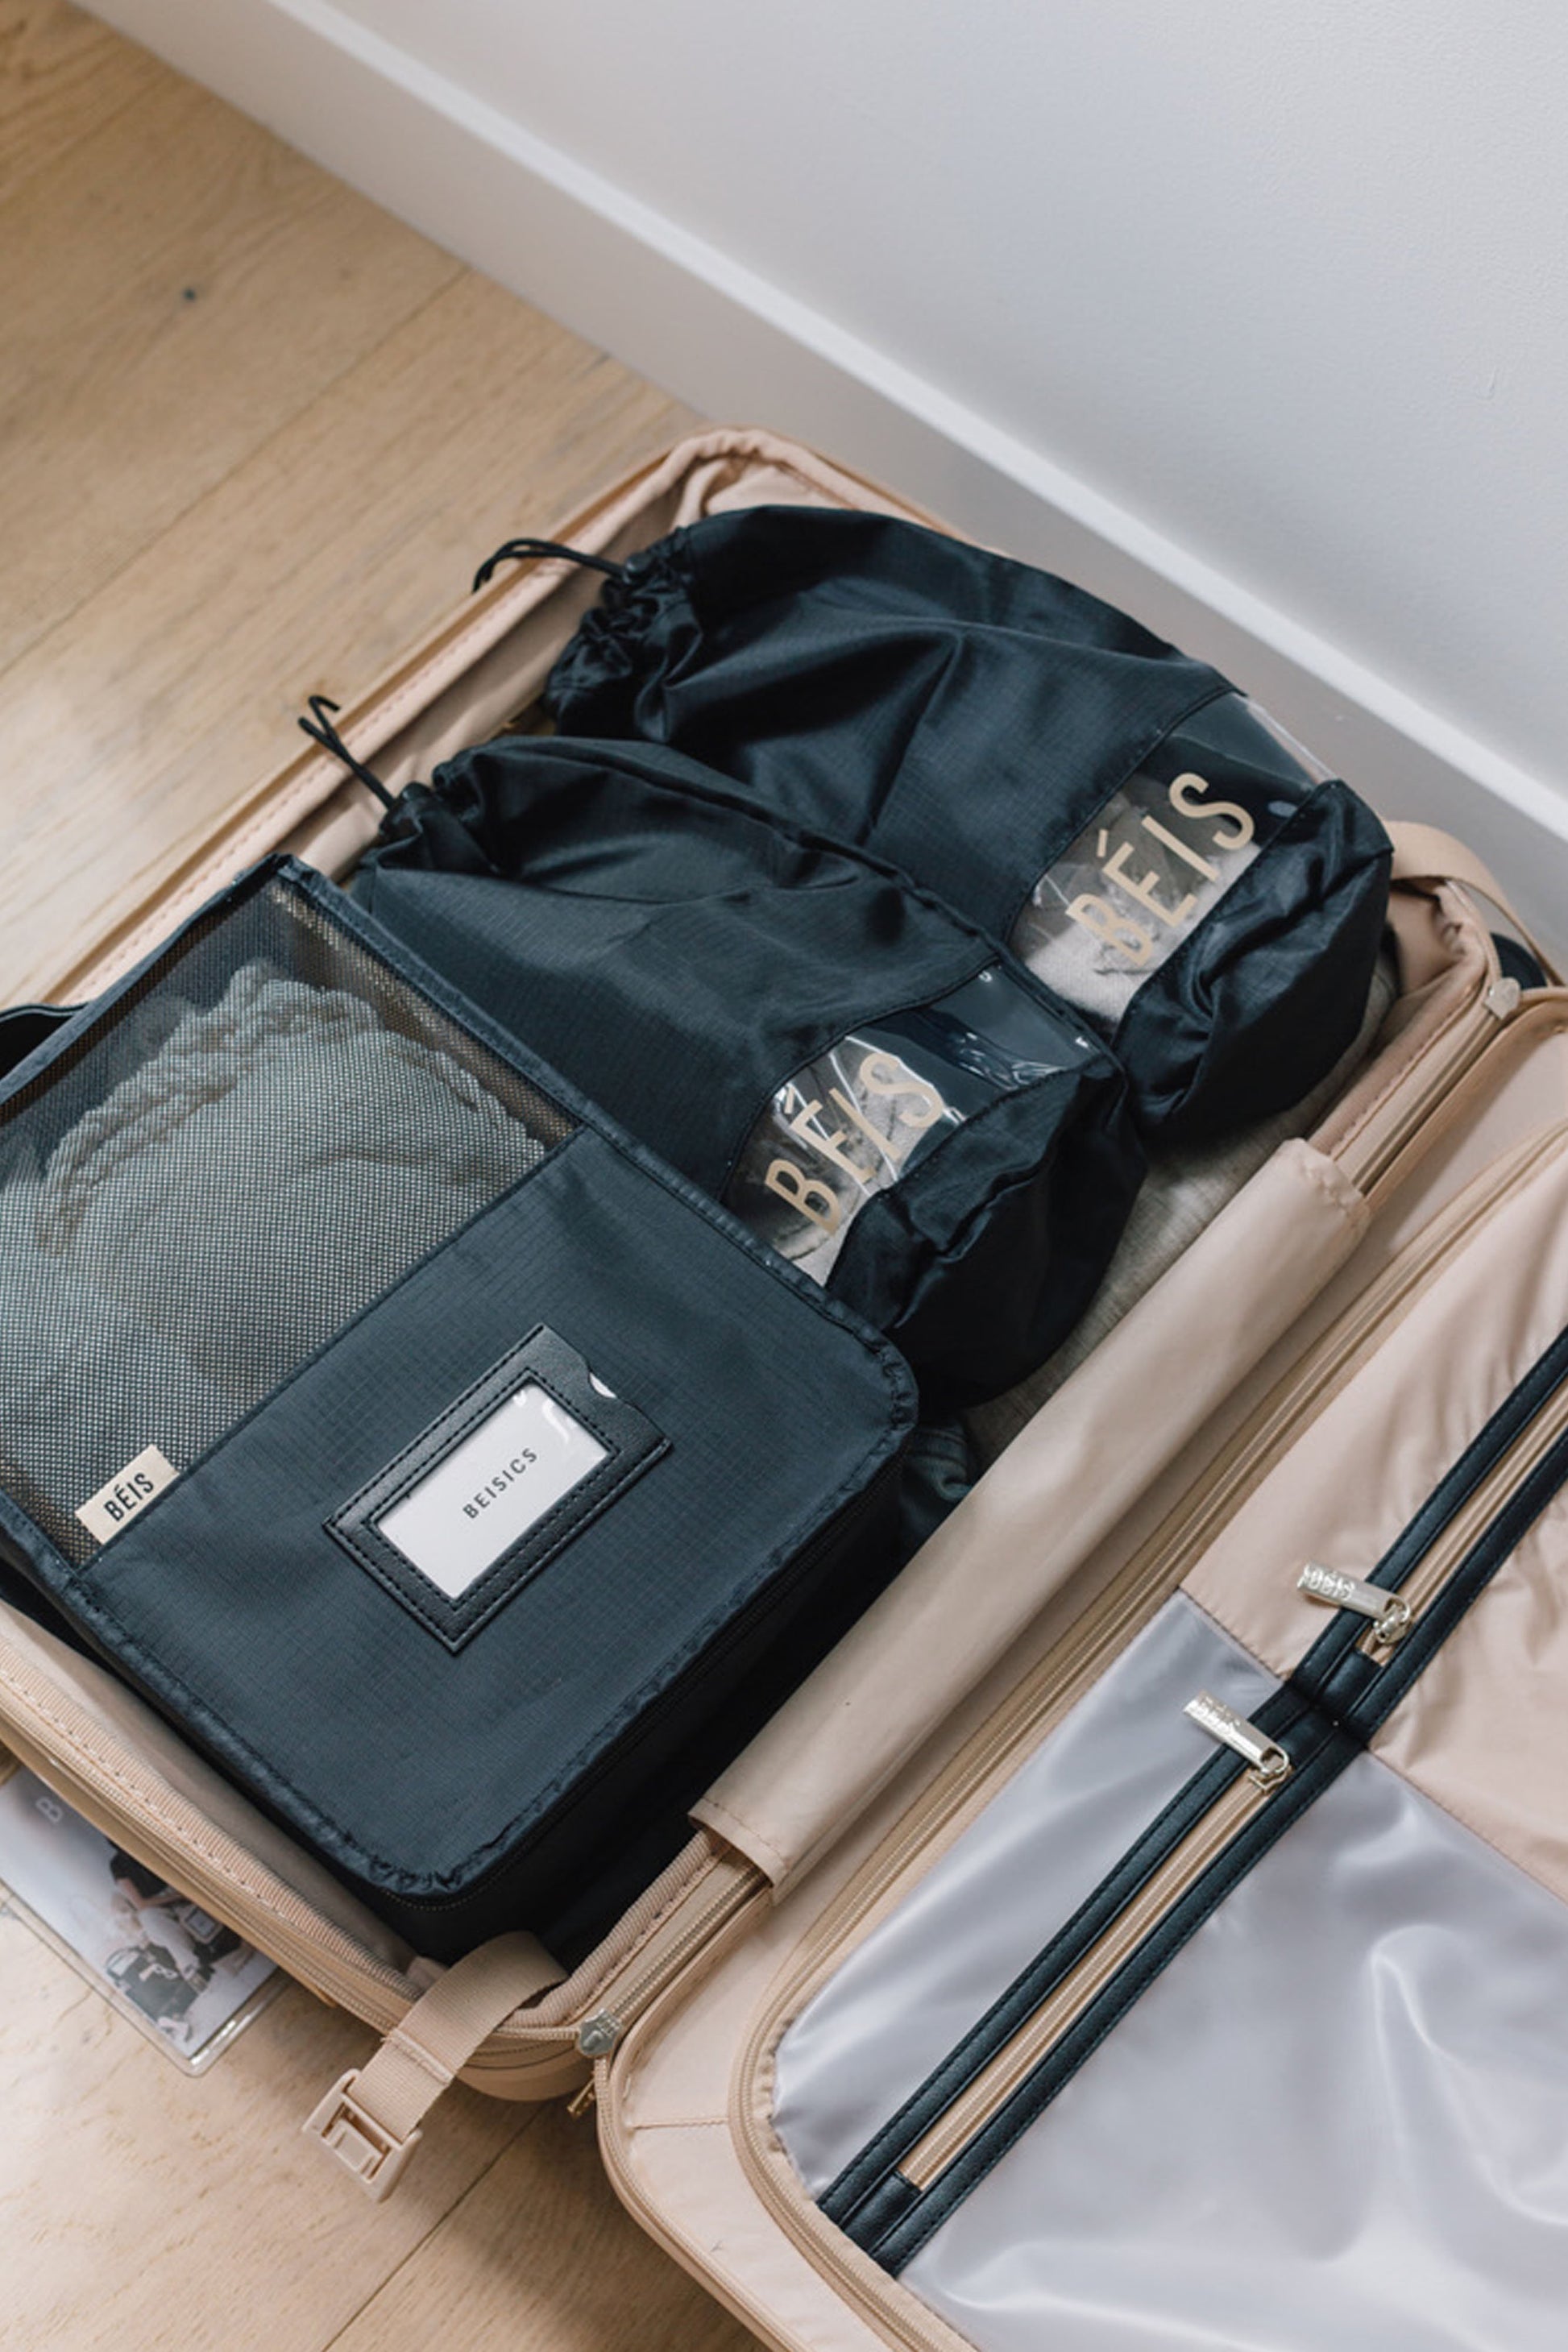 Garment Mesh Bag Cube for Travel Packing Organization